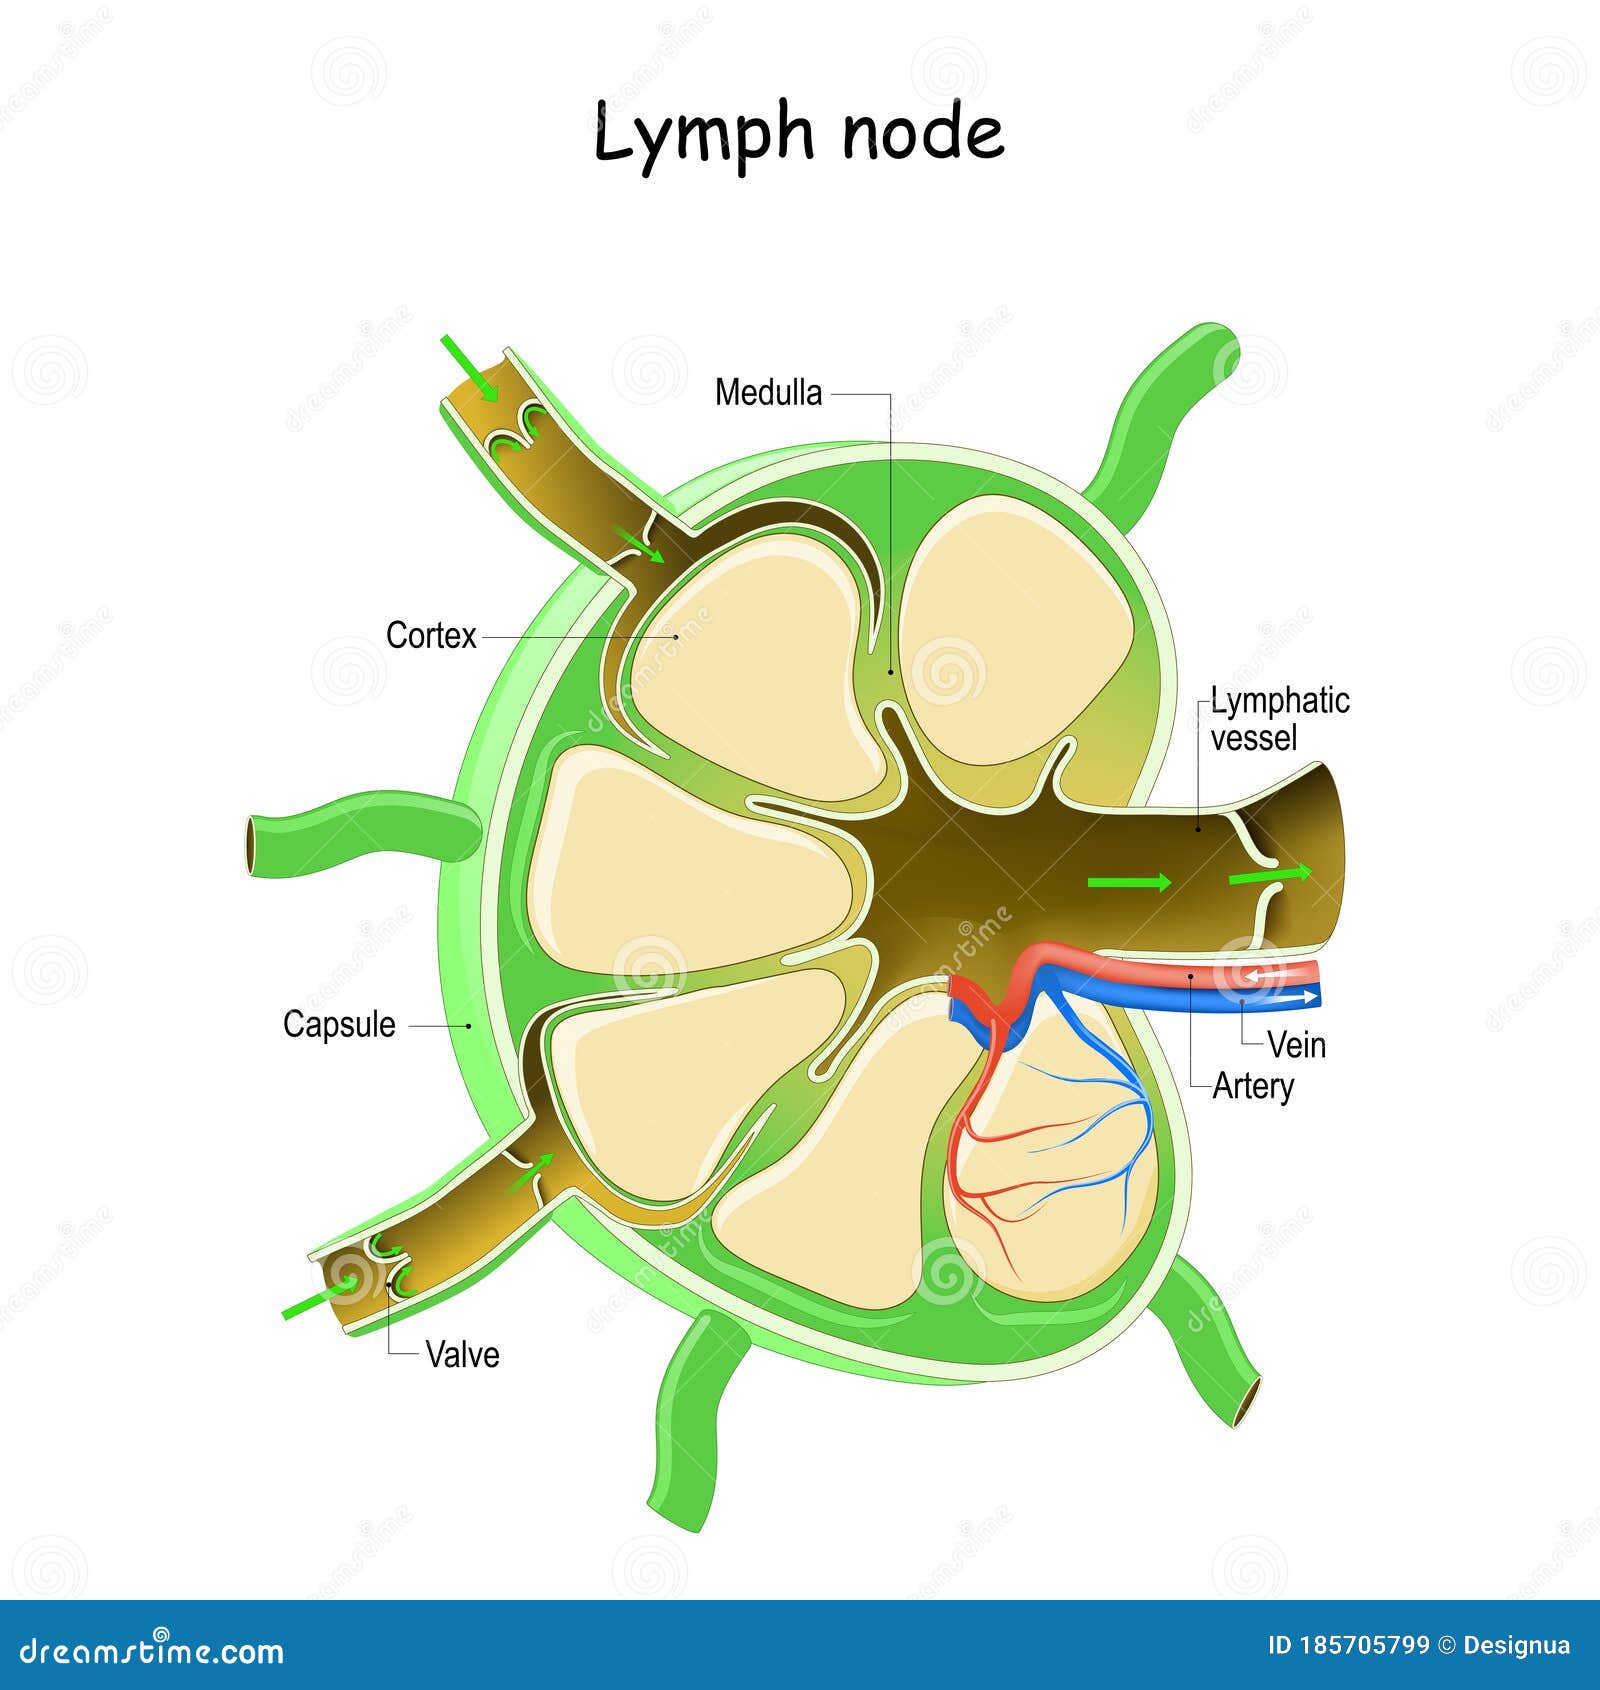 Face Lymph Nodes Anatomy